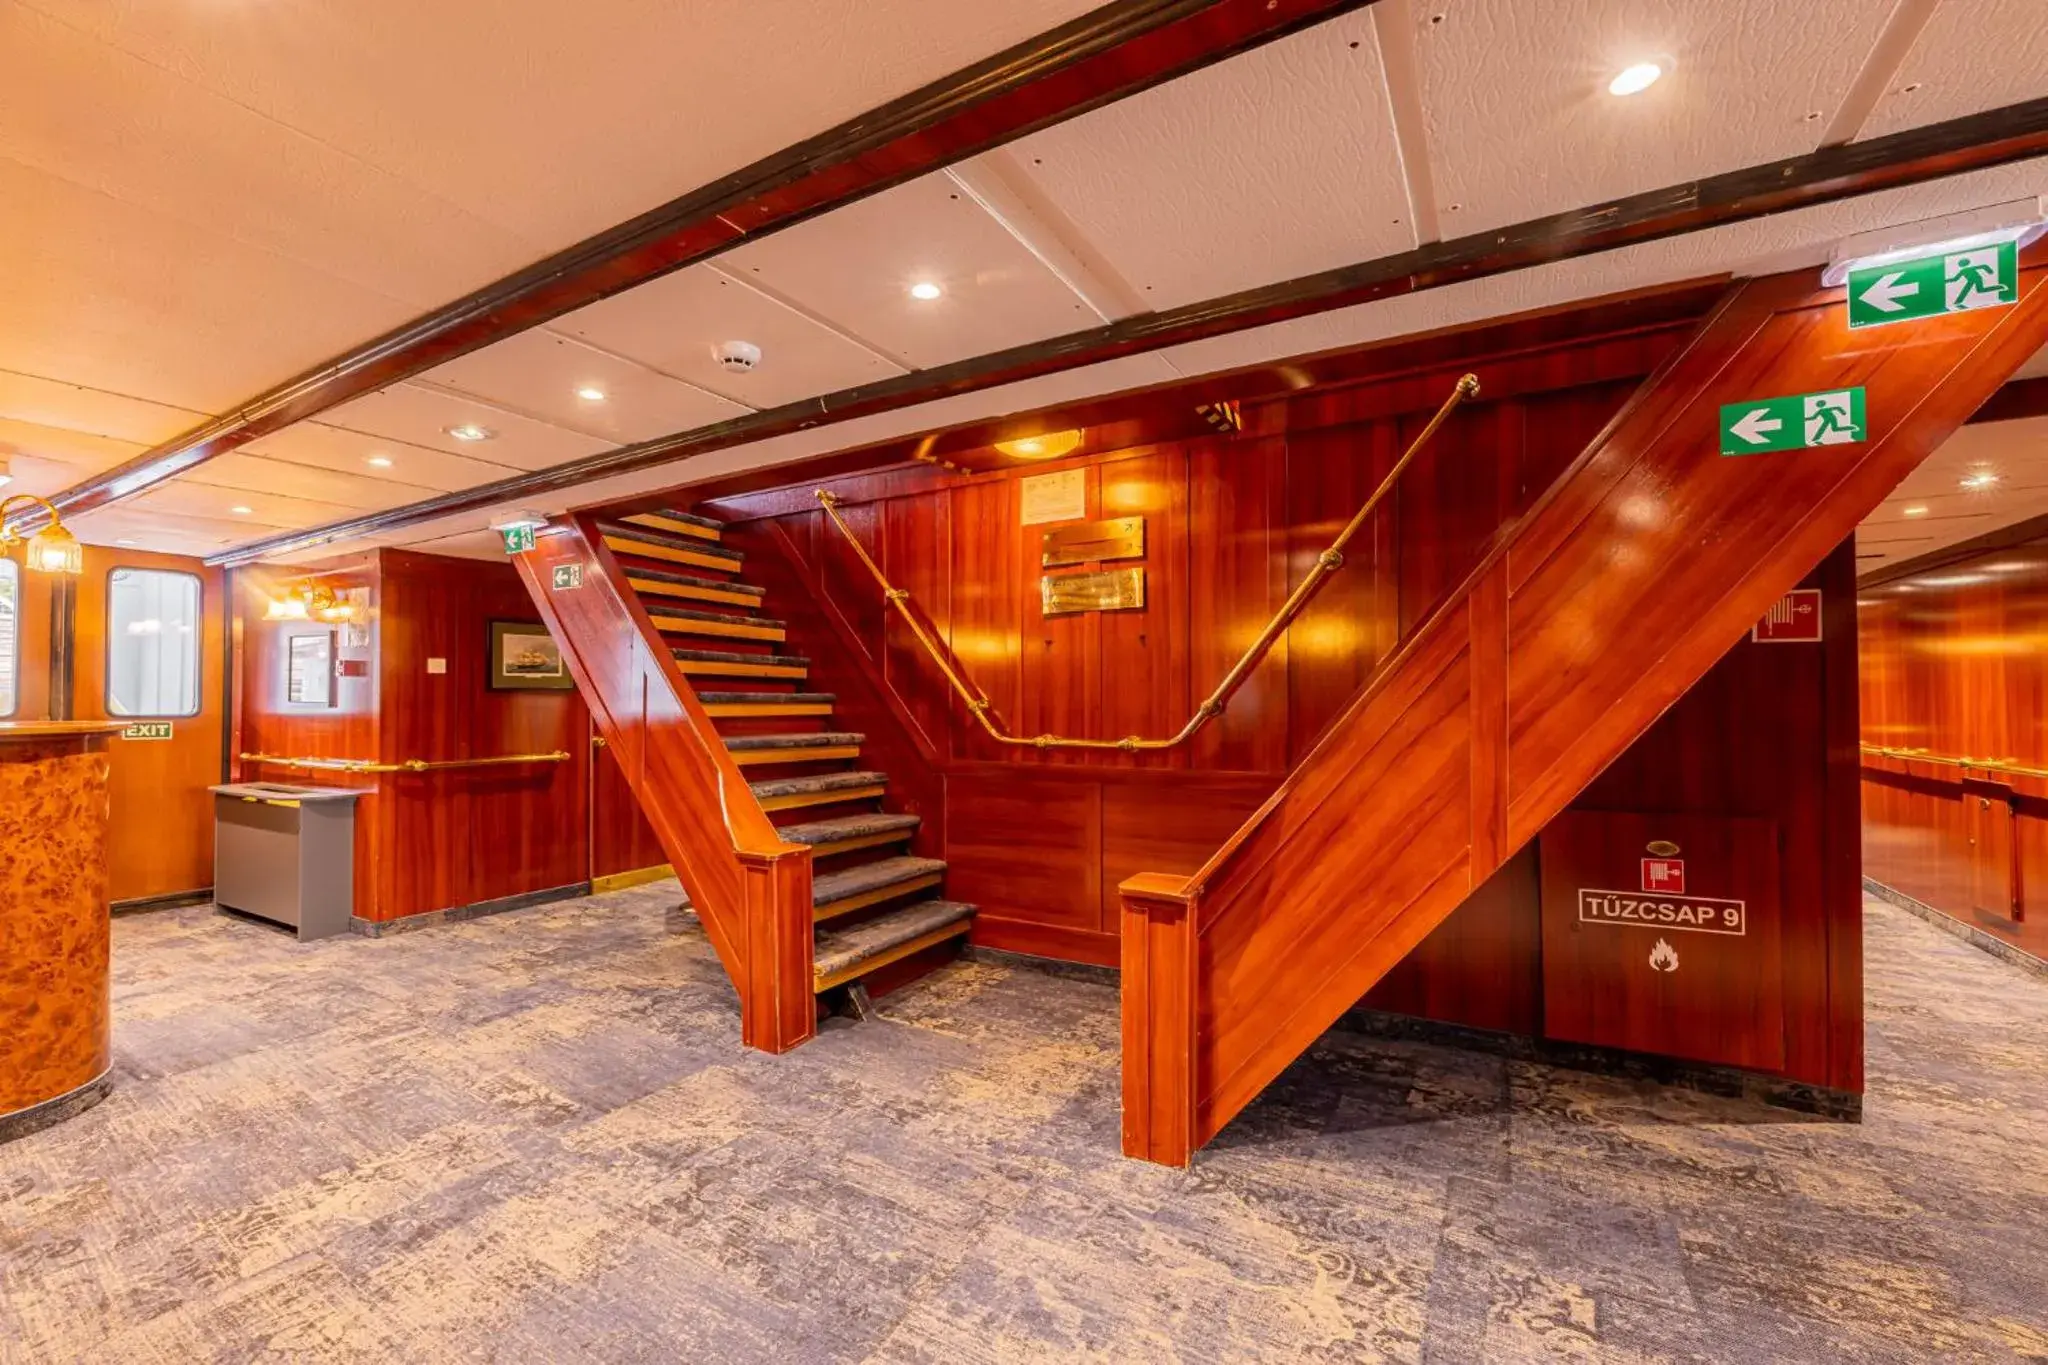 Lobby or reception in Fortuna Boat Hotel